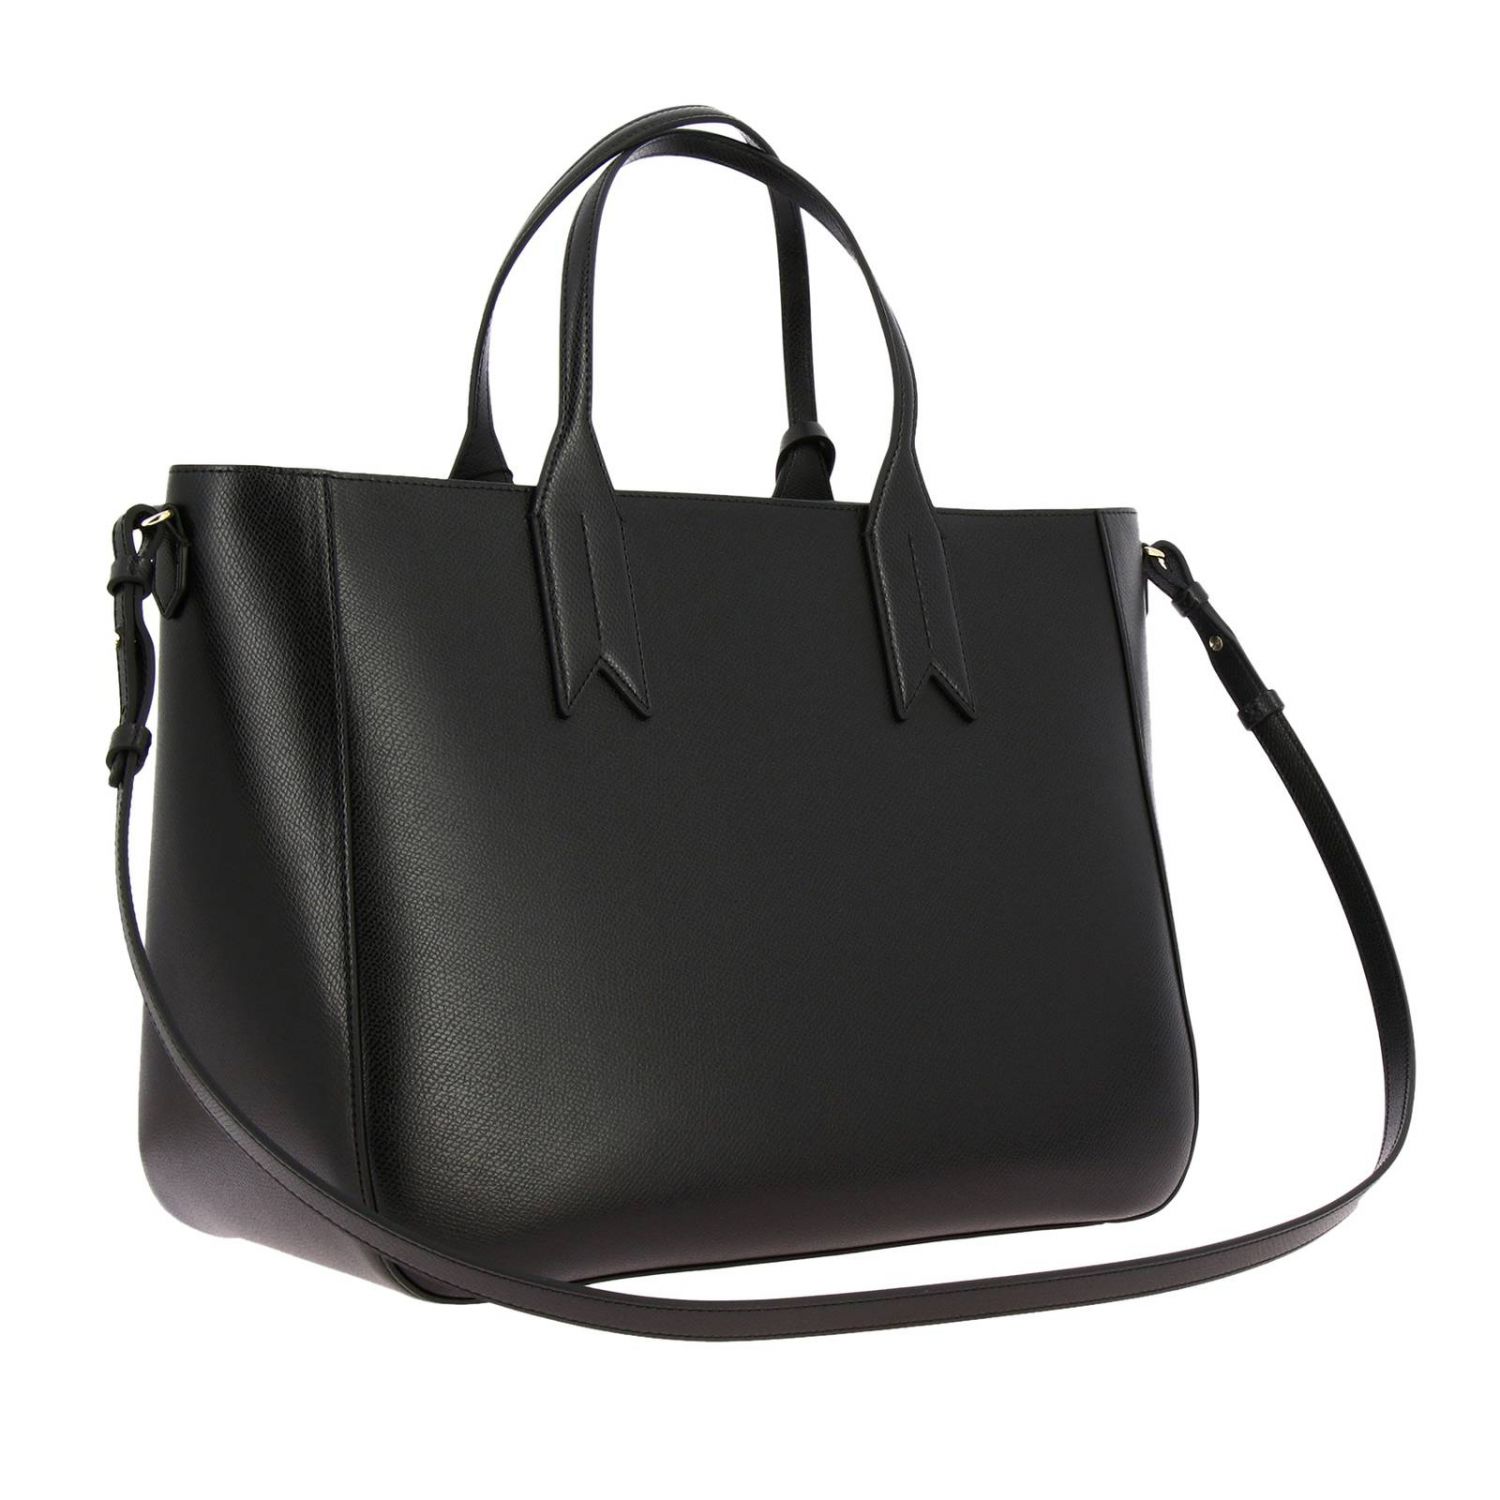 Emporio Armani Outlet: handbag for woman - Black | Emporio Armani ...